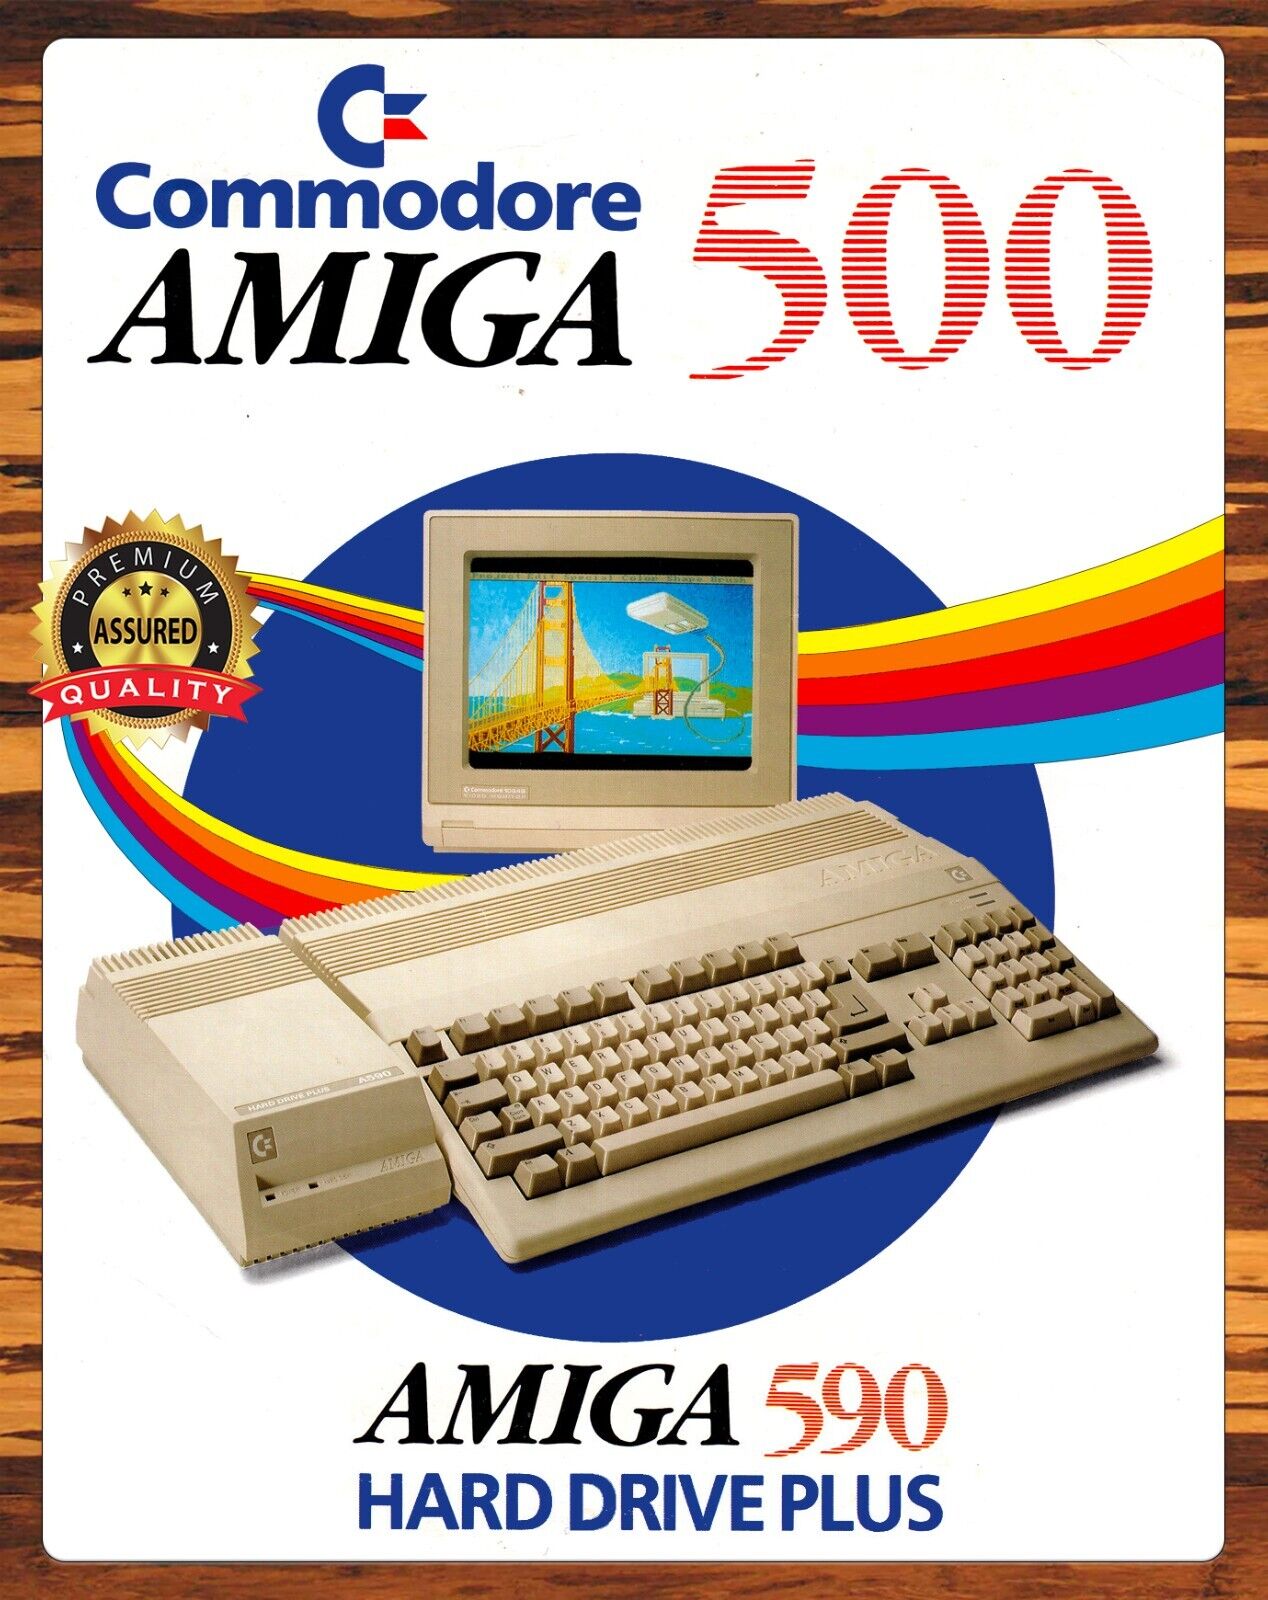 Commodore Amiga 500 - Restored - Metal Sign 11 x 14